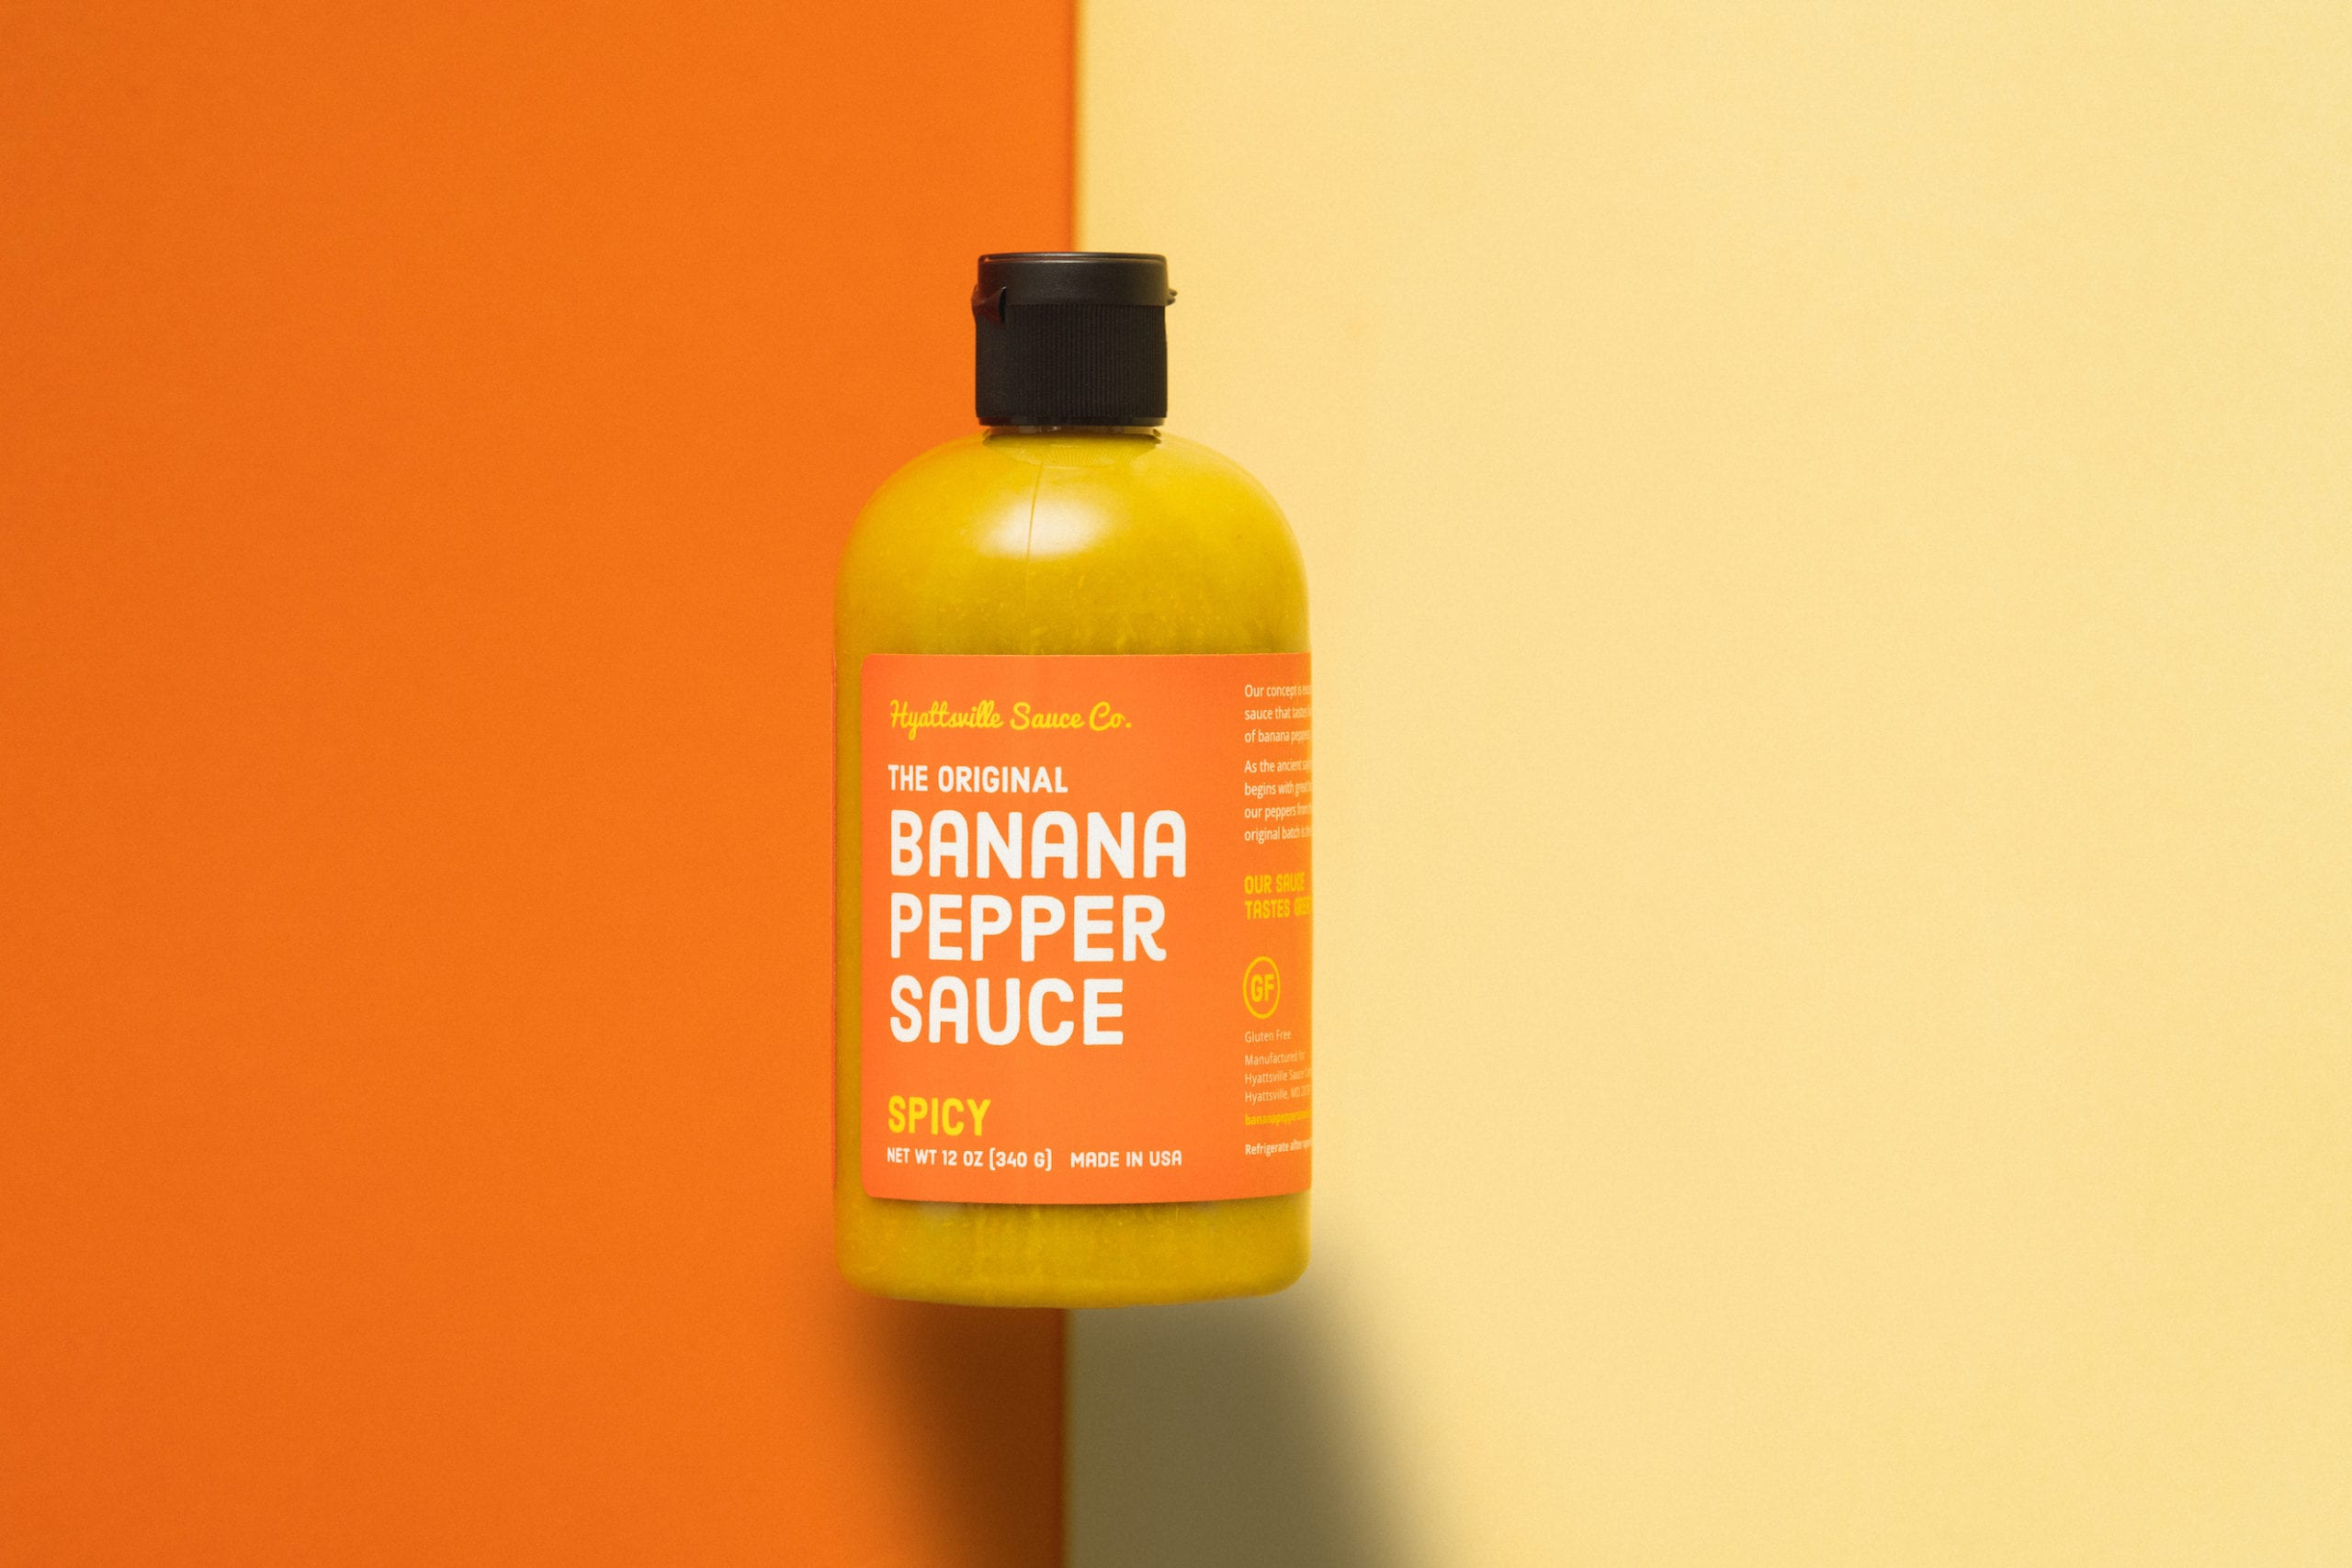 The Original Banana Pepper Sauce bottle Spicy flavor